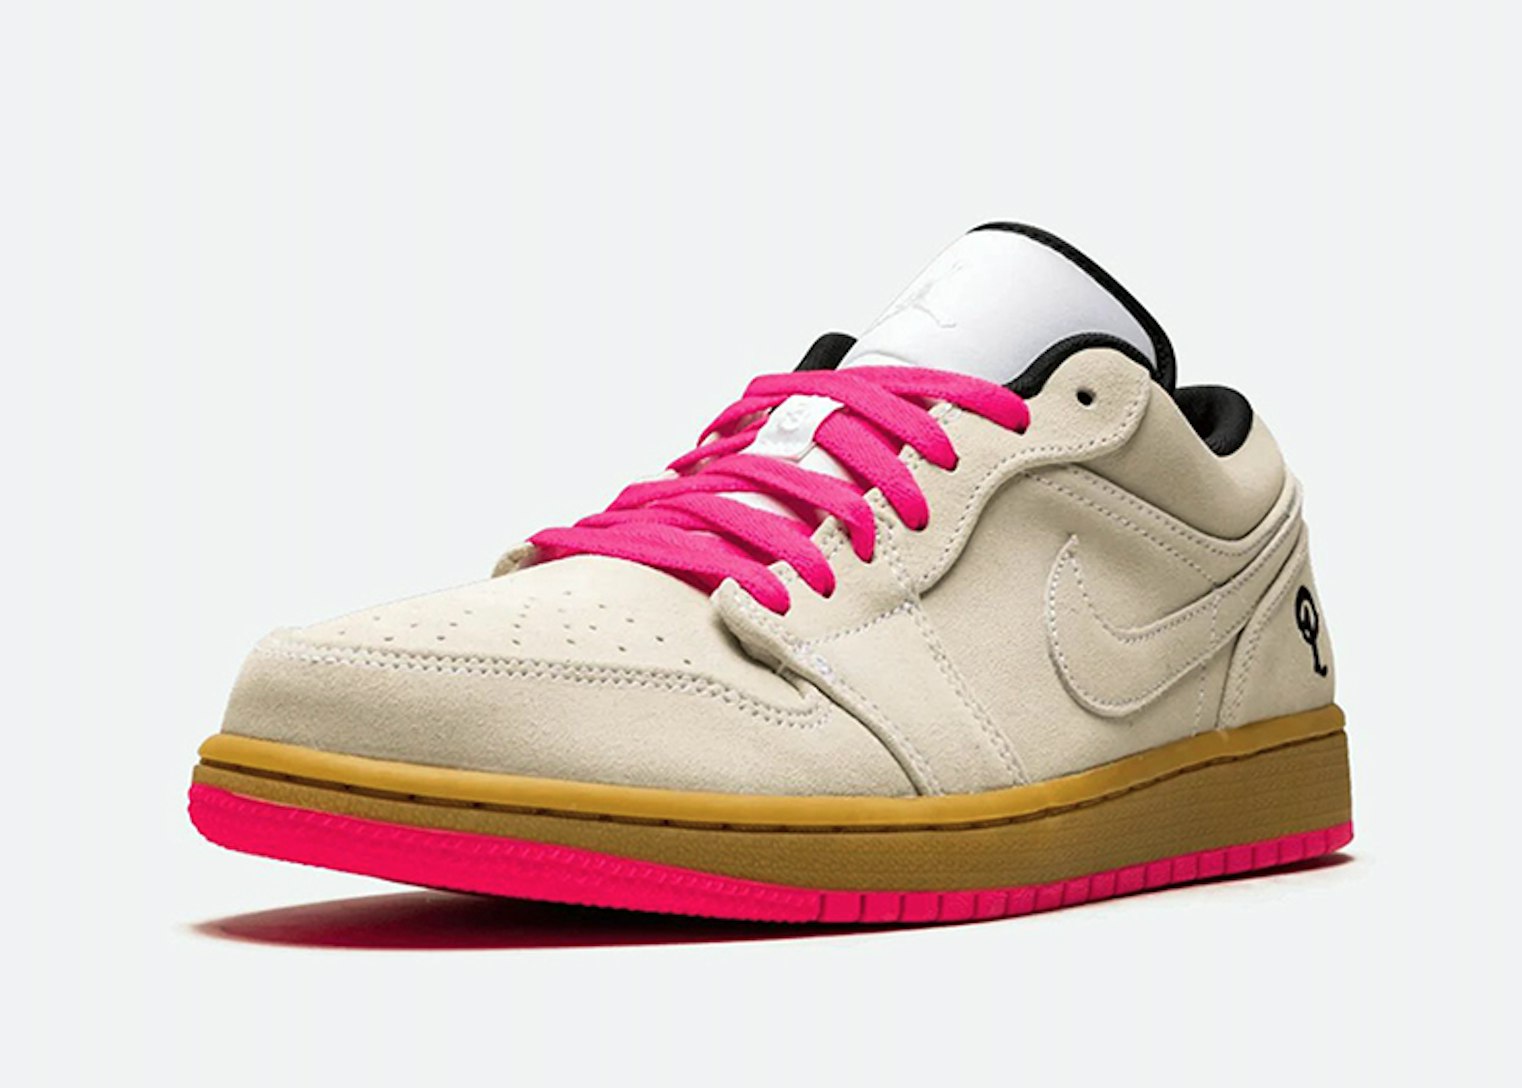 Sneaker Politics x Air Jordan 1 Low "Hyper Pink"